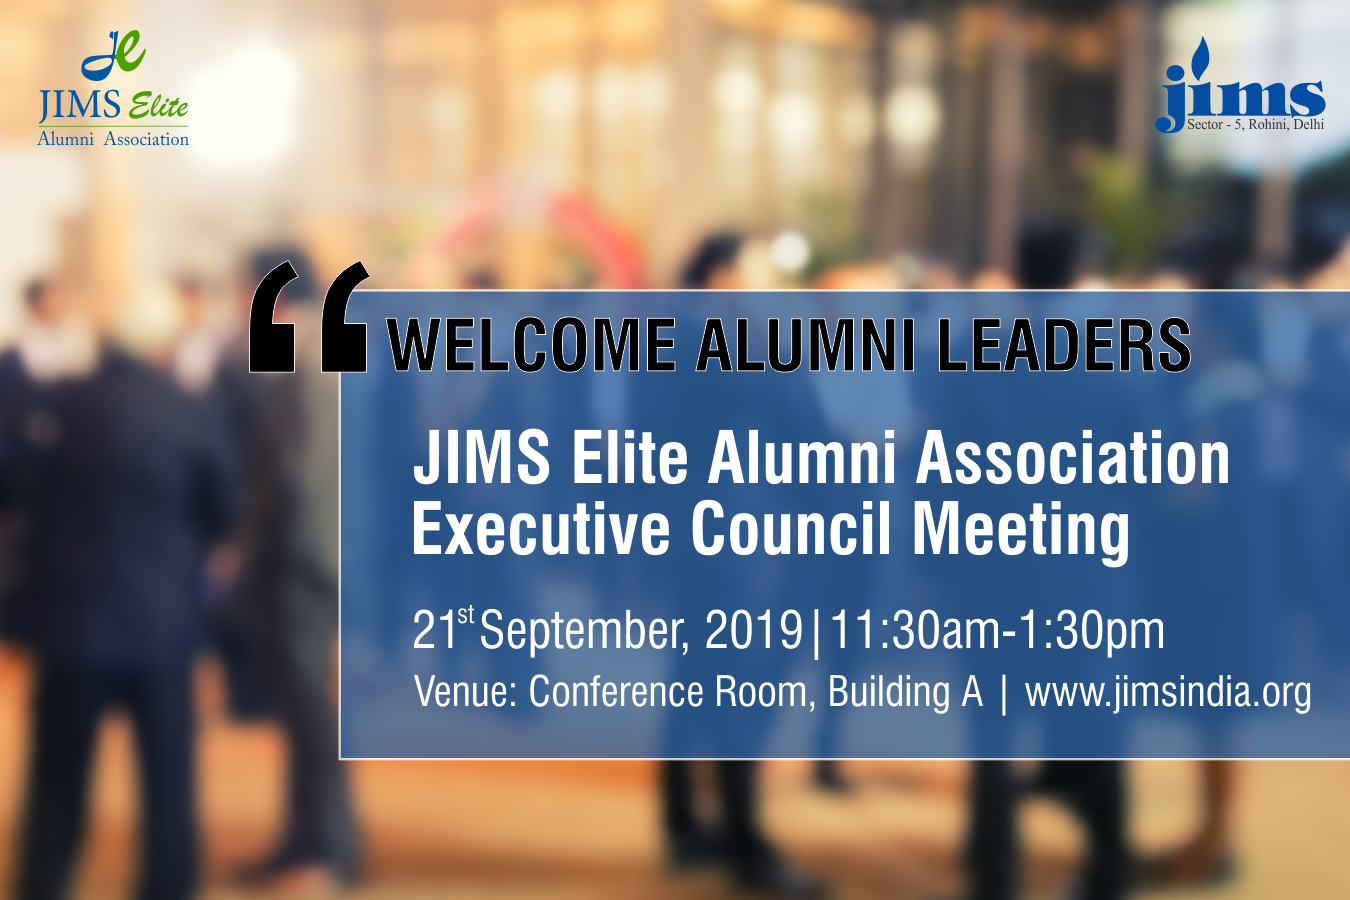 JIMS Elite Alumni Association Executive Council Meeting 